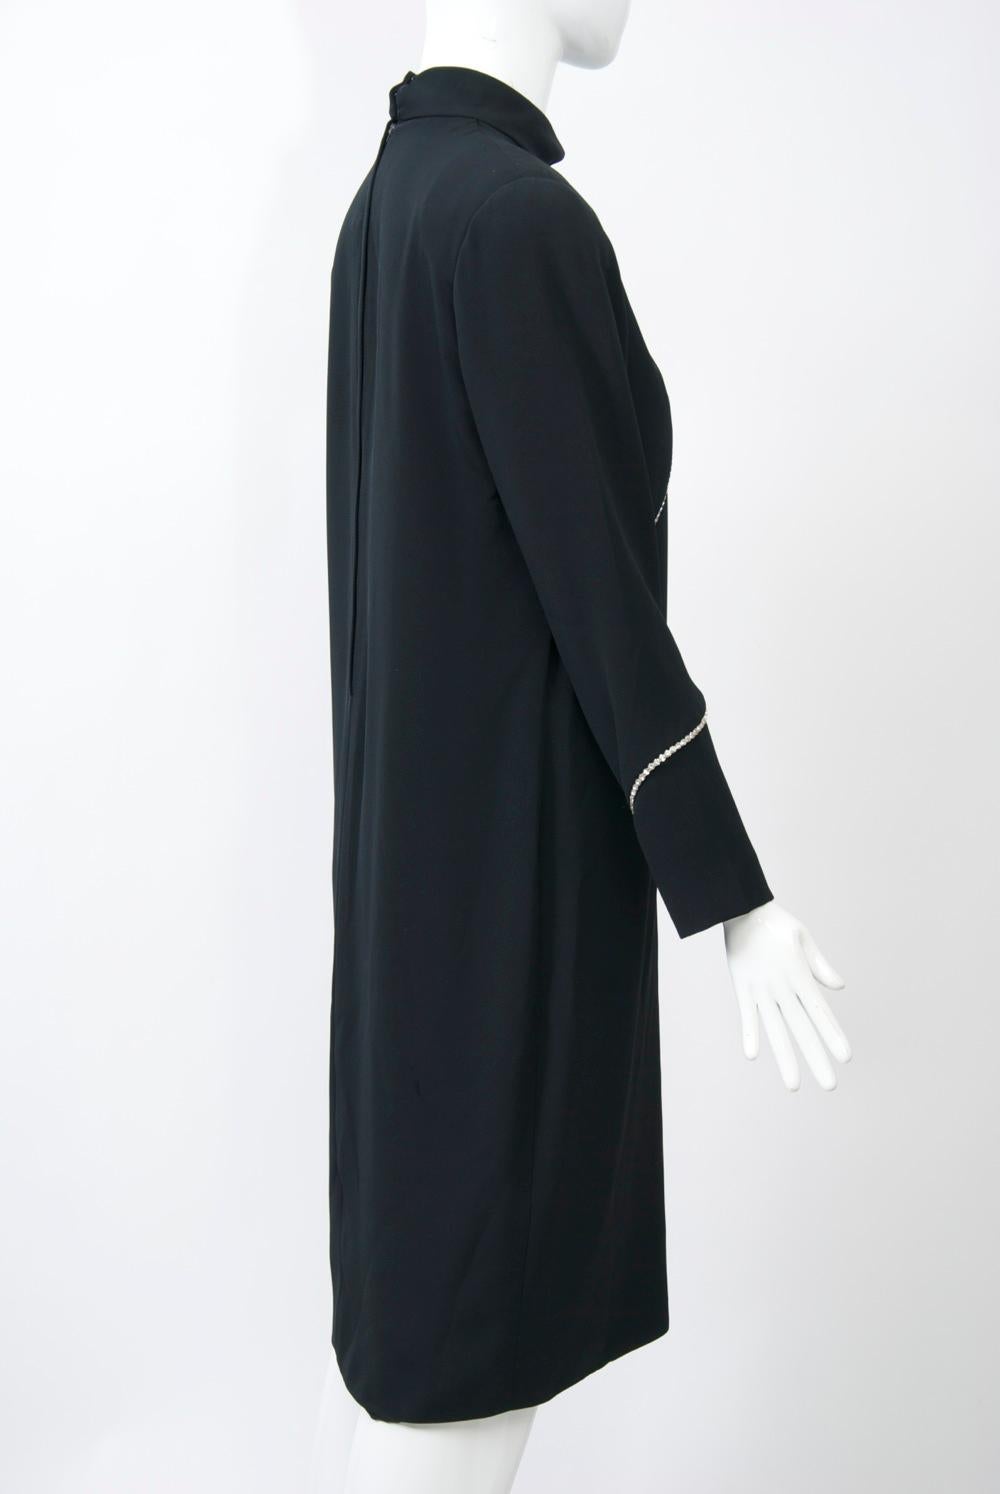 black dress with rhinestones